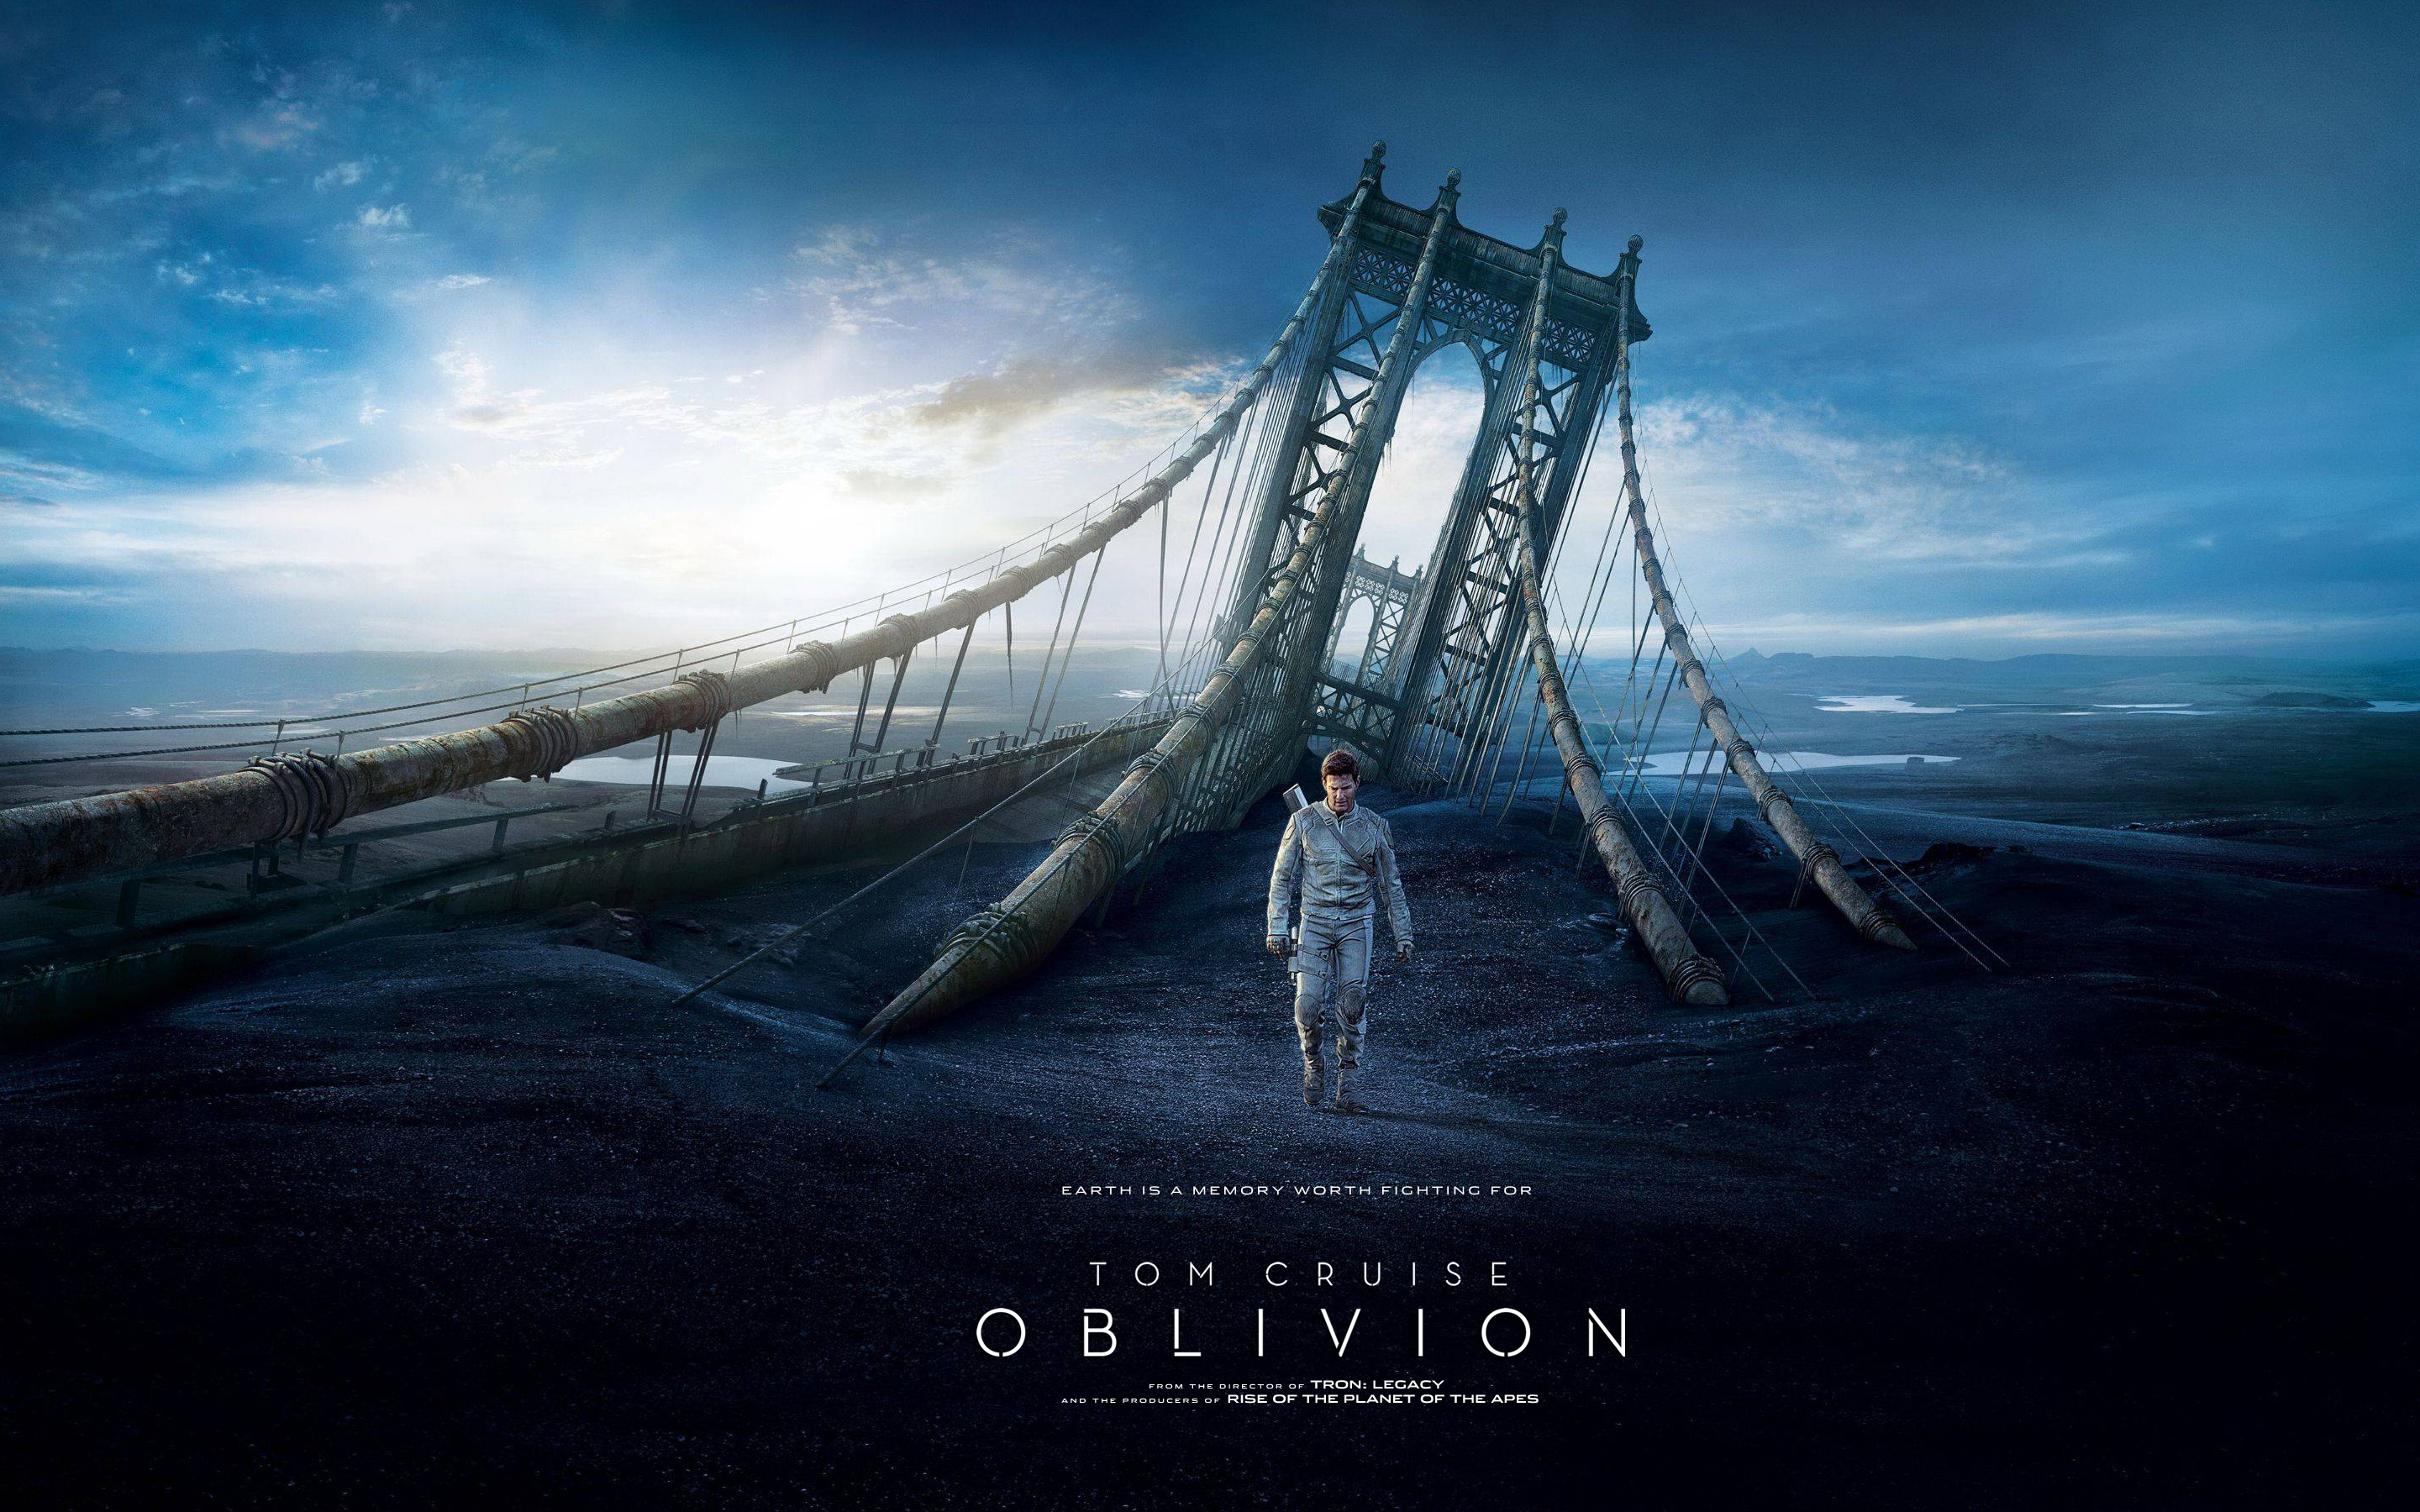 Oblivion Movie Wallpaper HD